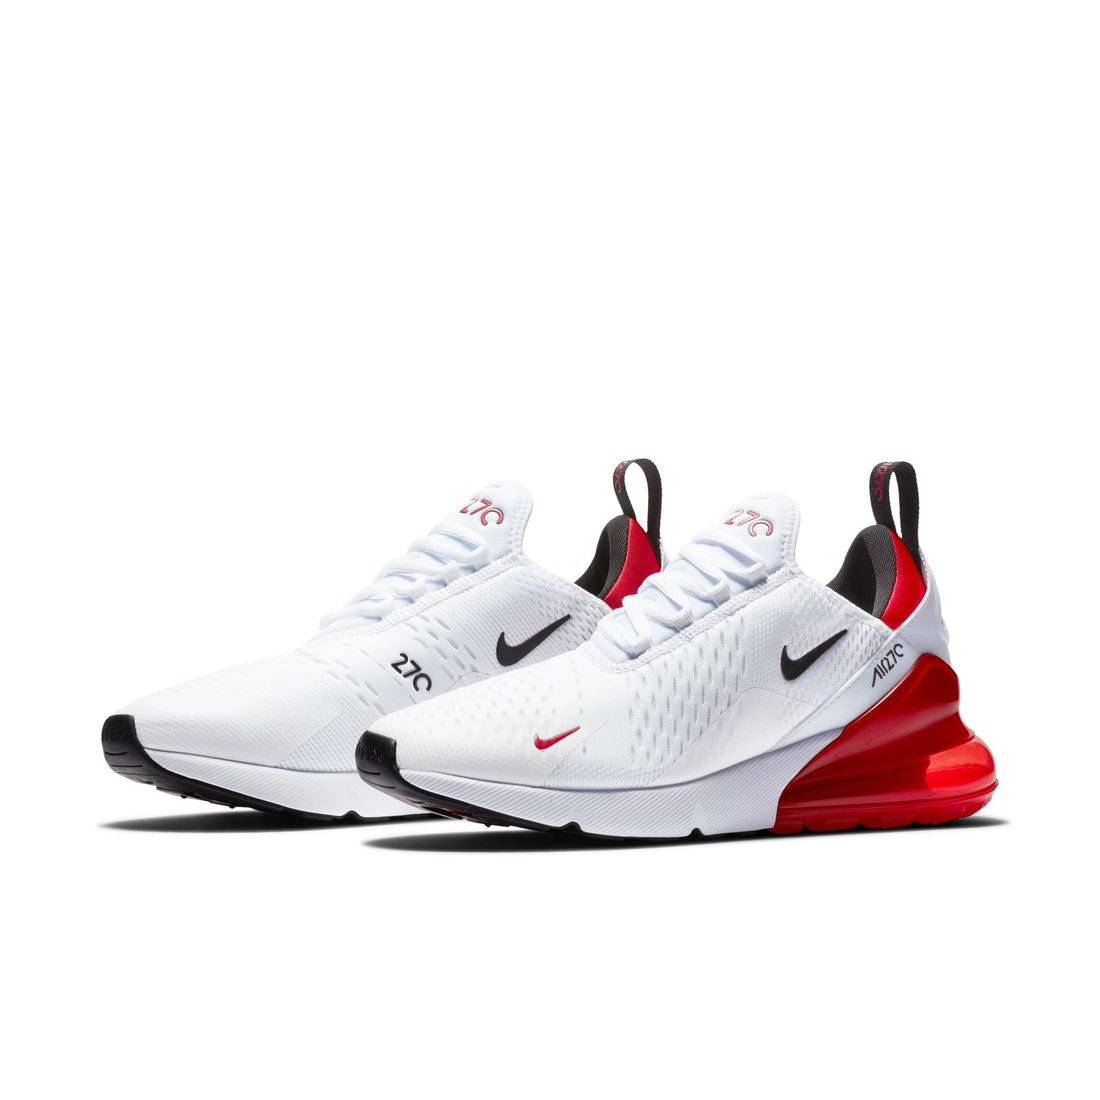 Nike Air Max 270 (White/Black/University Red)